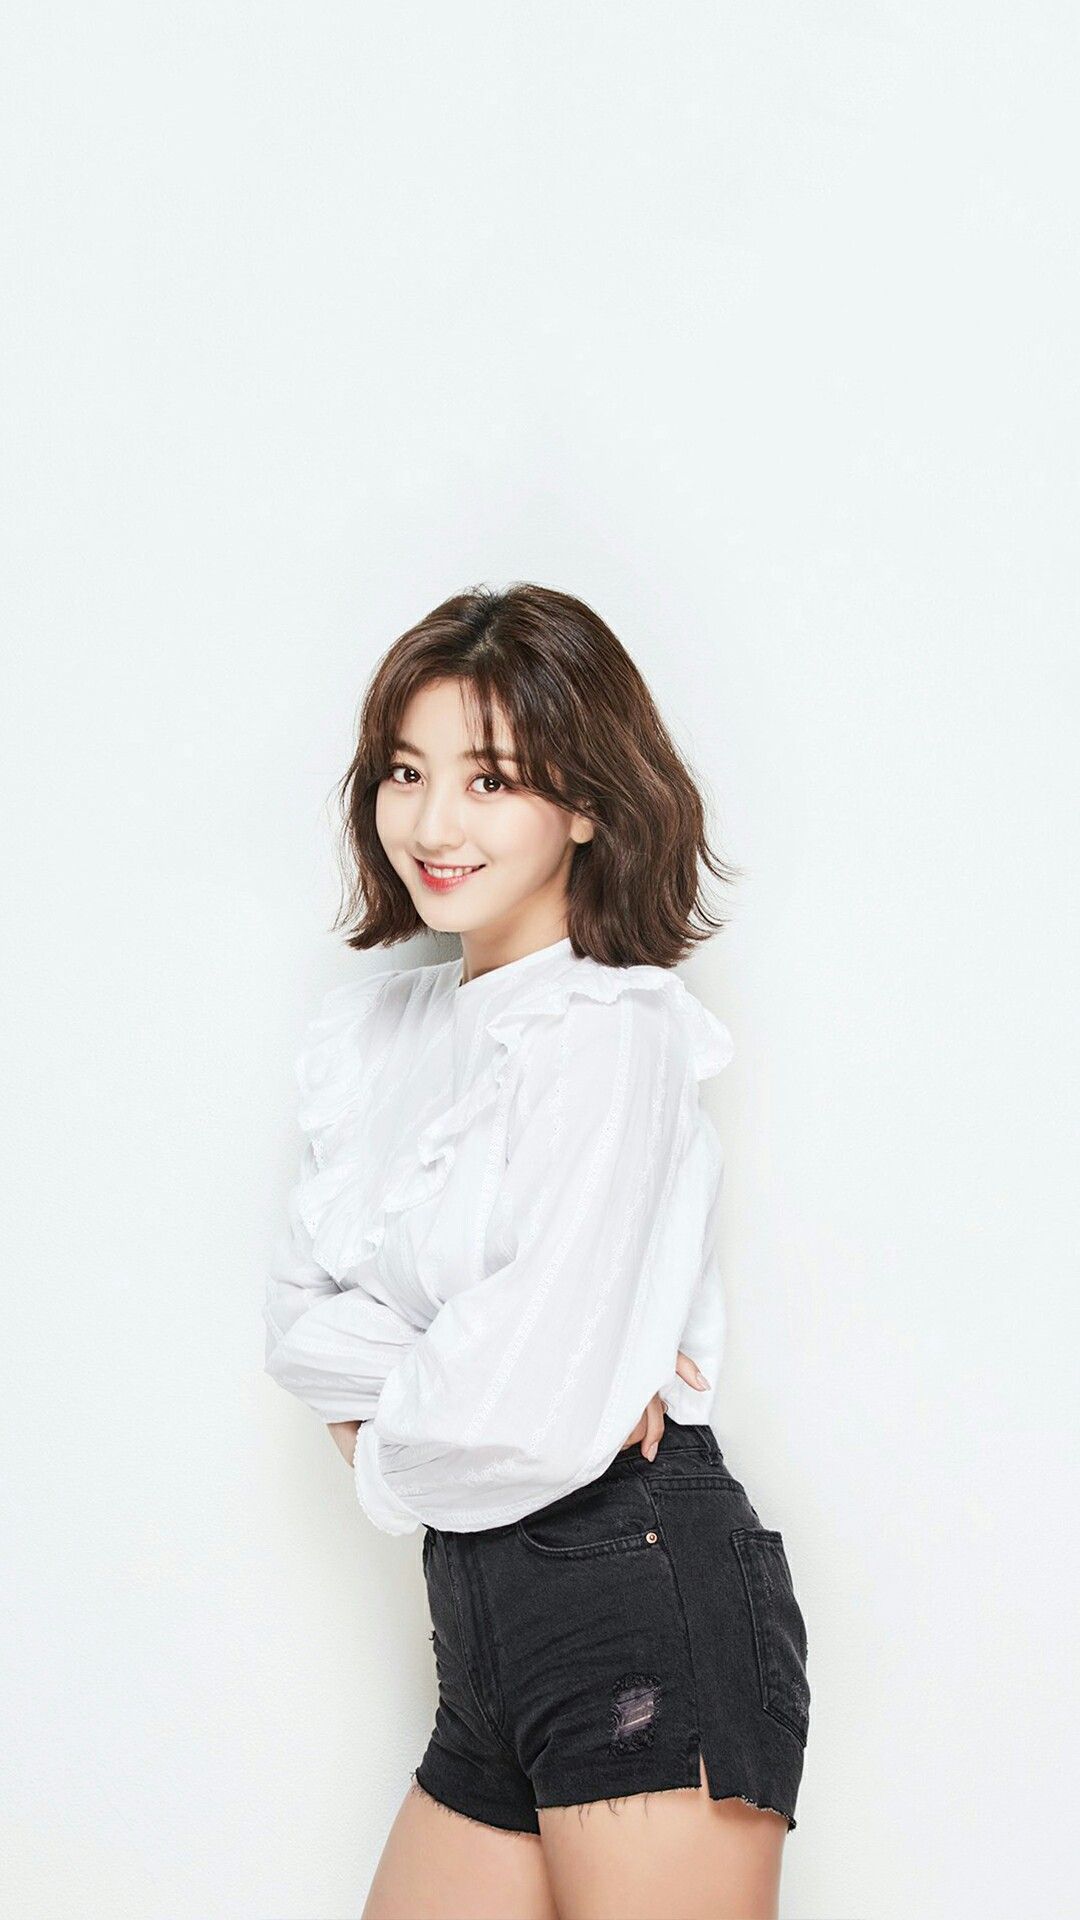 Twice x OhBoy 2018 kpop wallpaper Lockscreen Sana Chaeyoung Momo